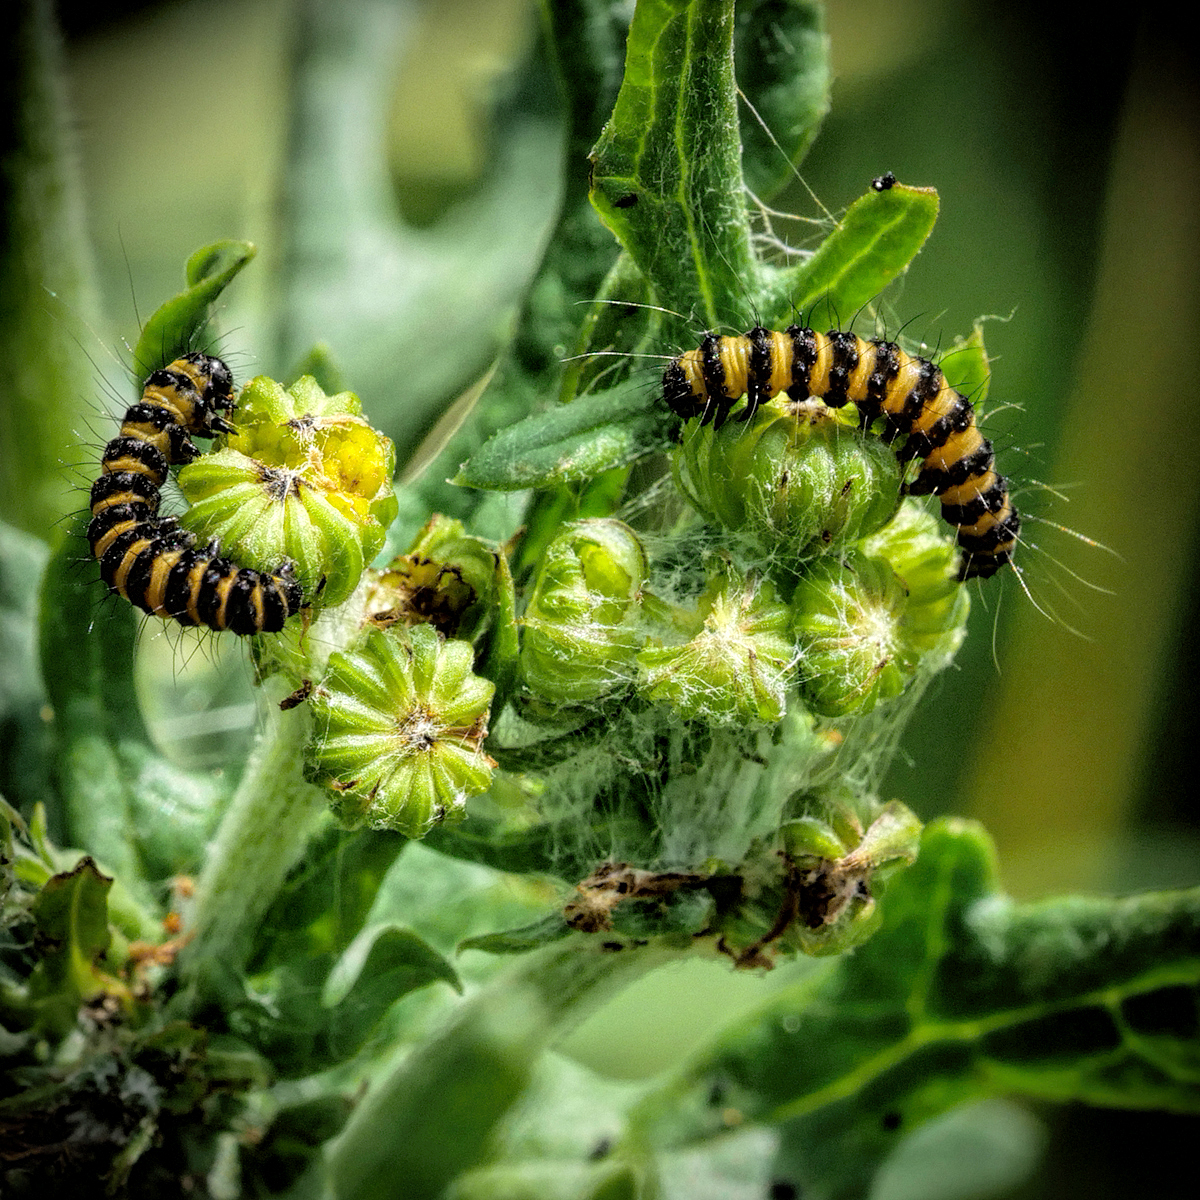 Cinnabar moth caterpillars on ragwort